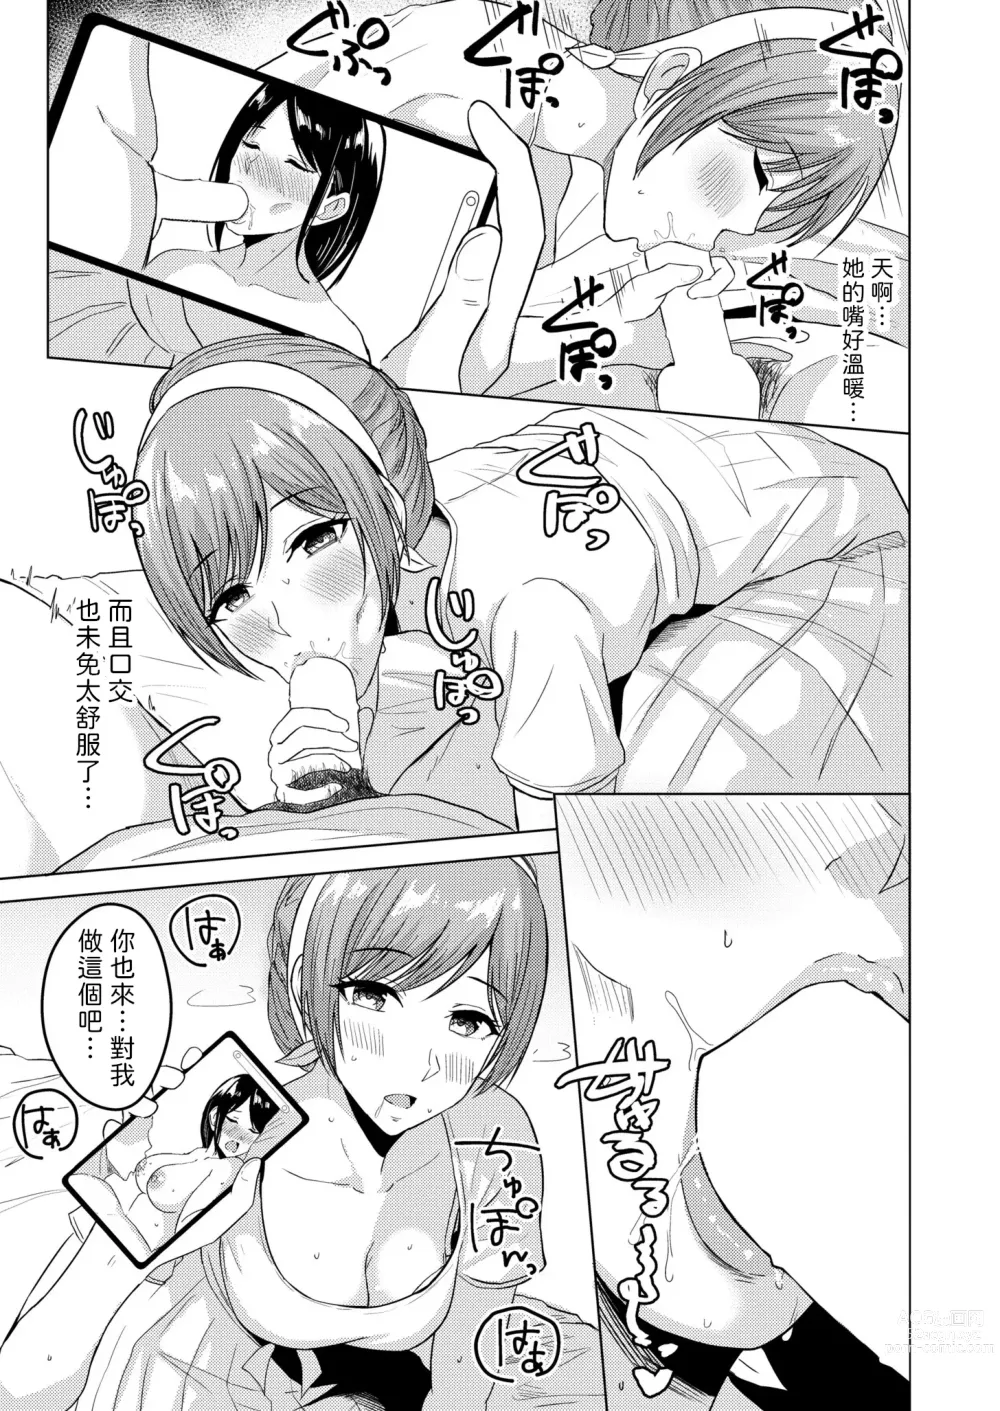 Page 9 of manga Natsue